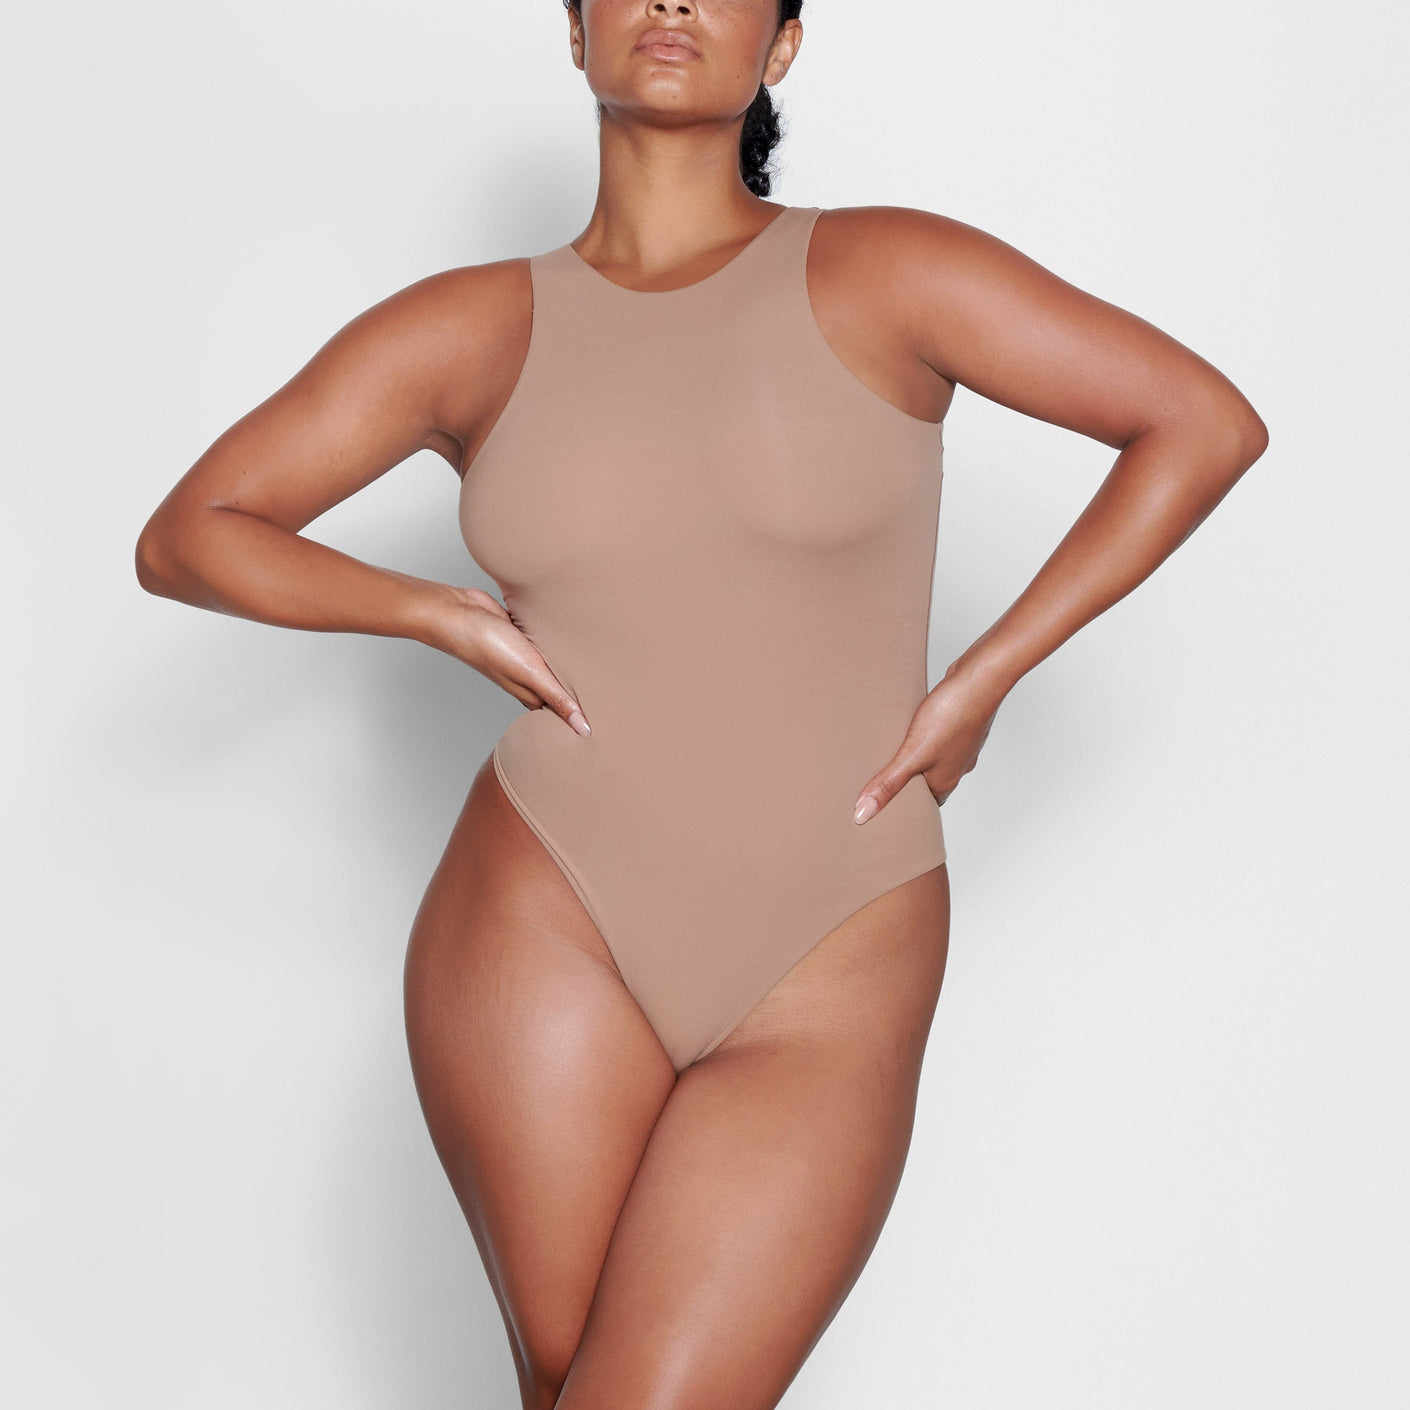 The viral Skims bodysuit by Kim Kardashian is a fan favourite for